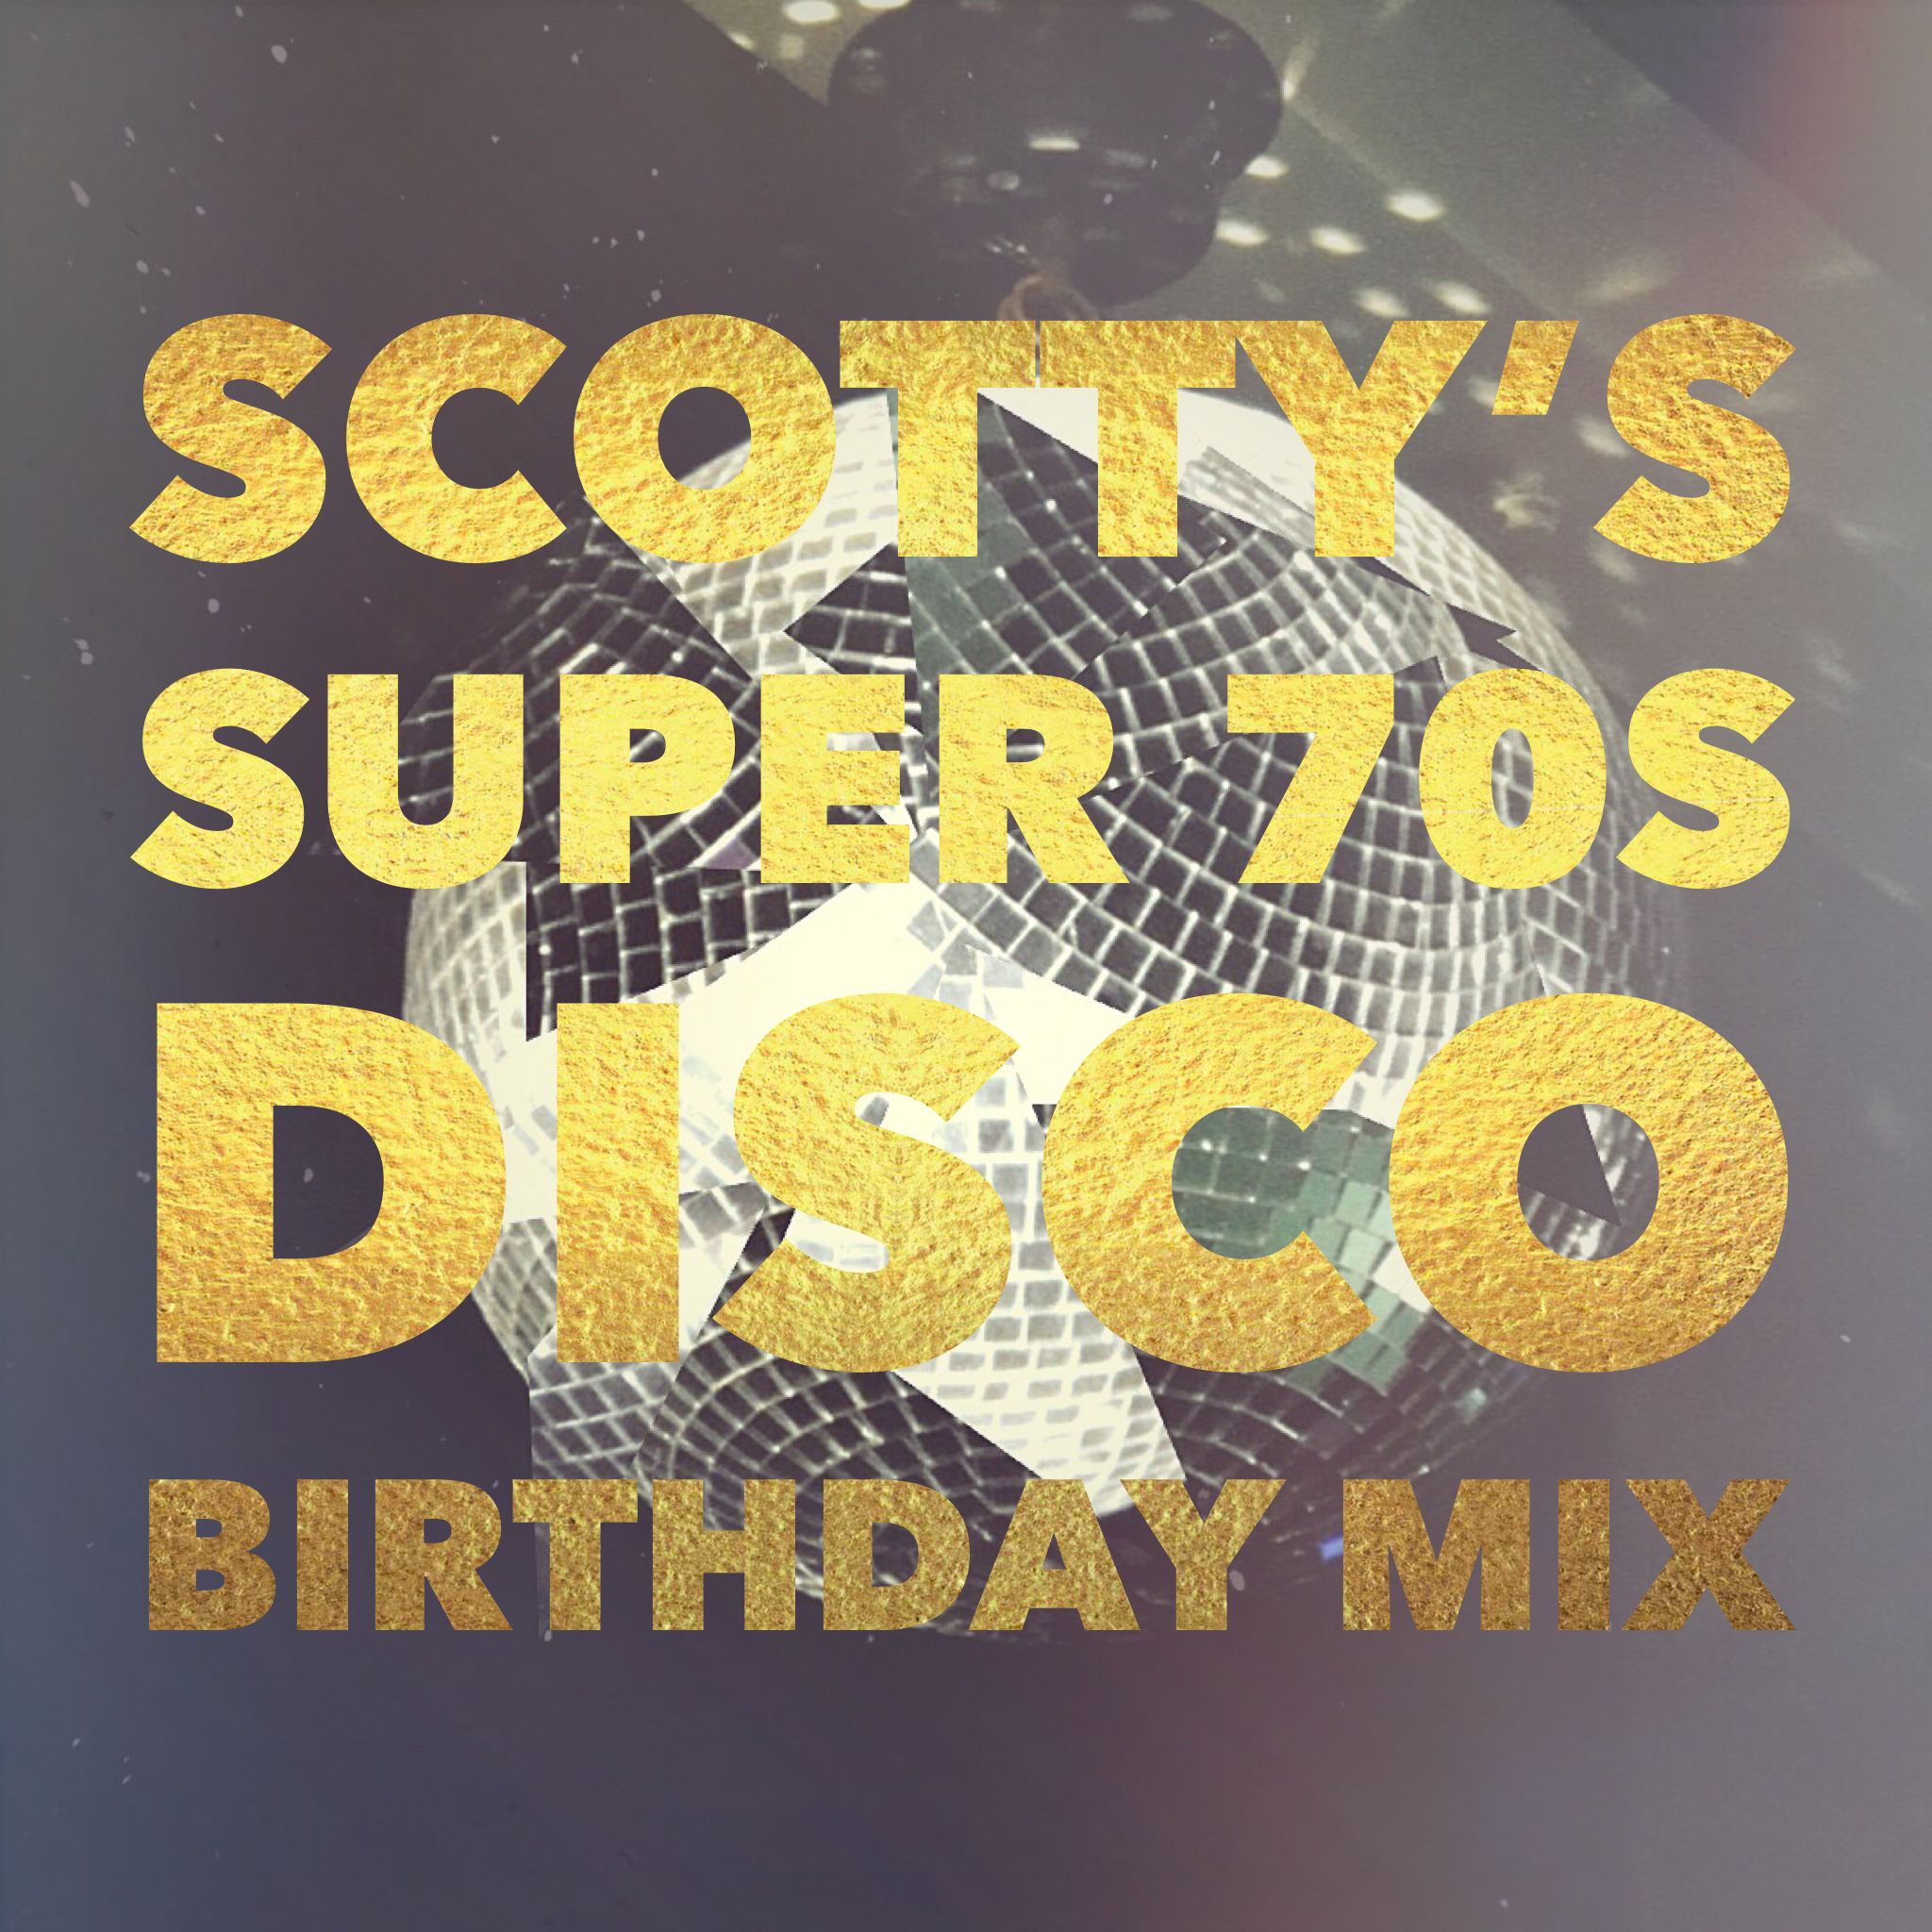 Scotty's Super 70s Disco Birthday Mix By 8ball